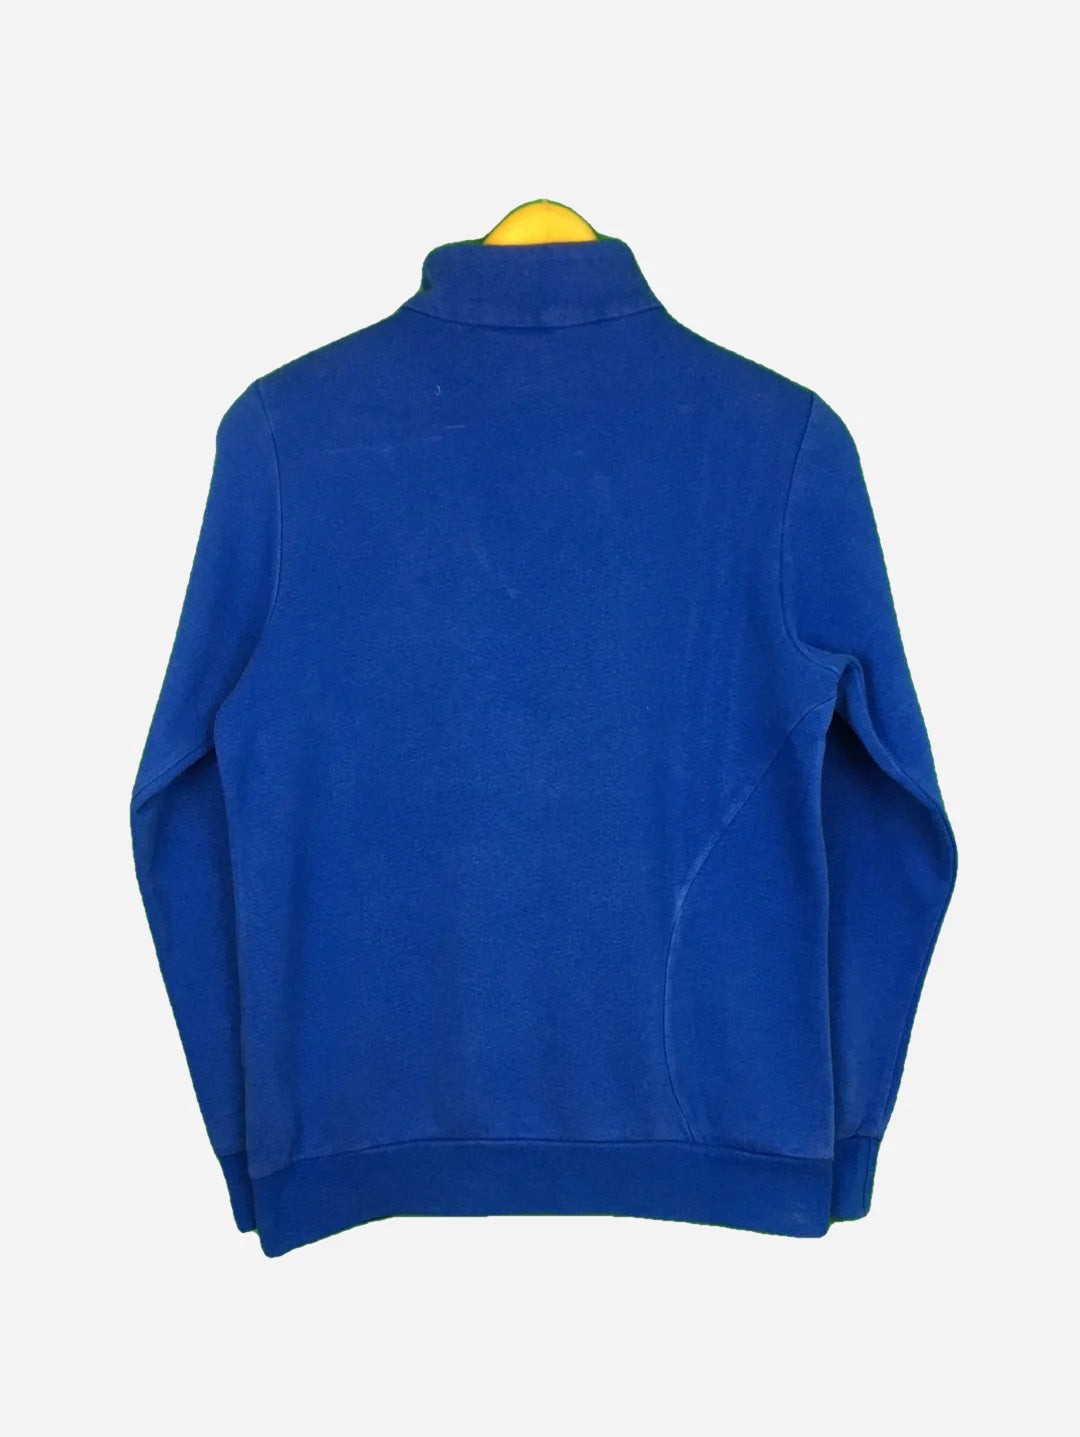 Adidas Zip Sweater (S)